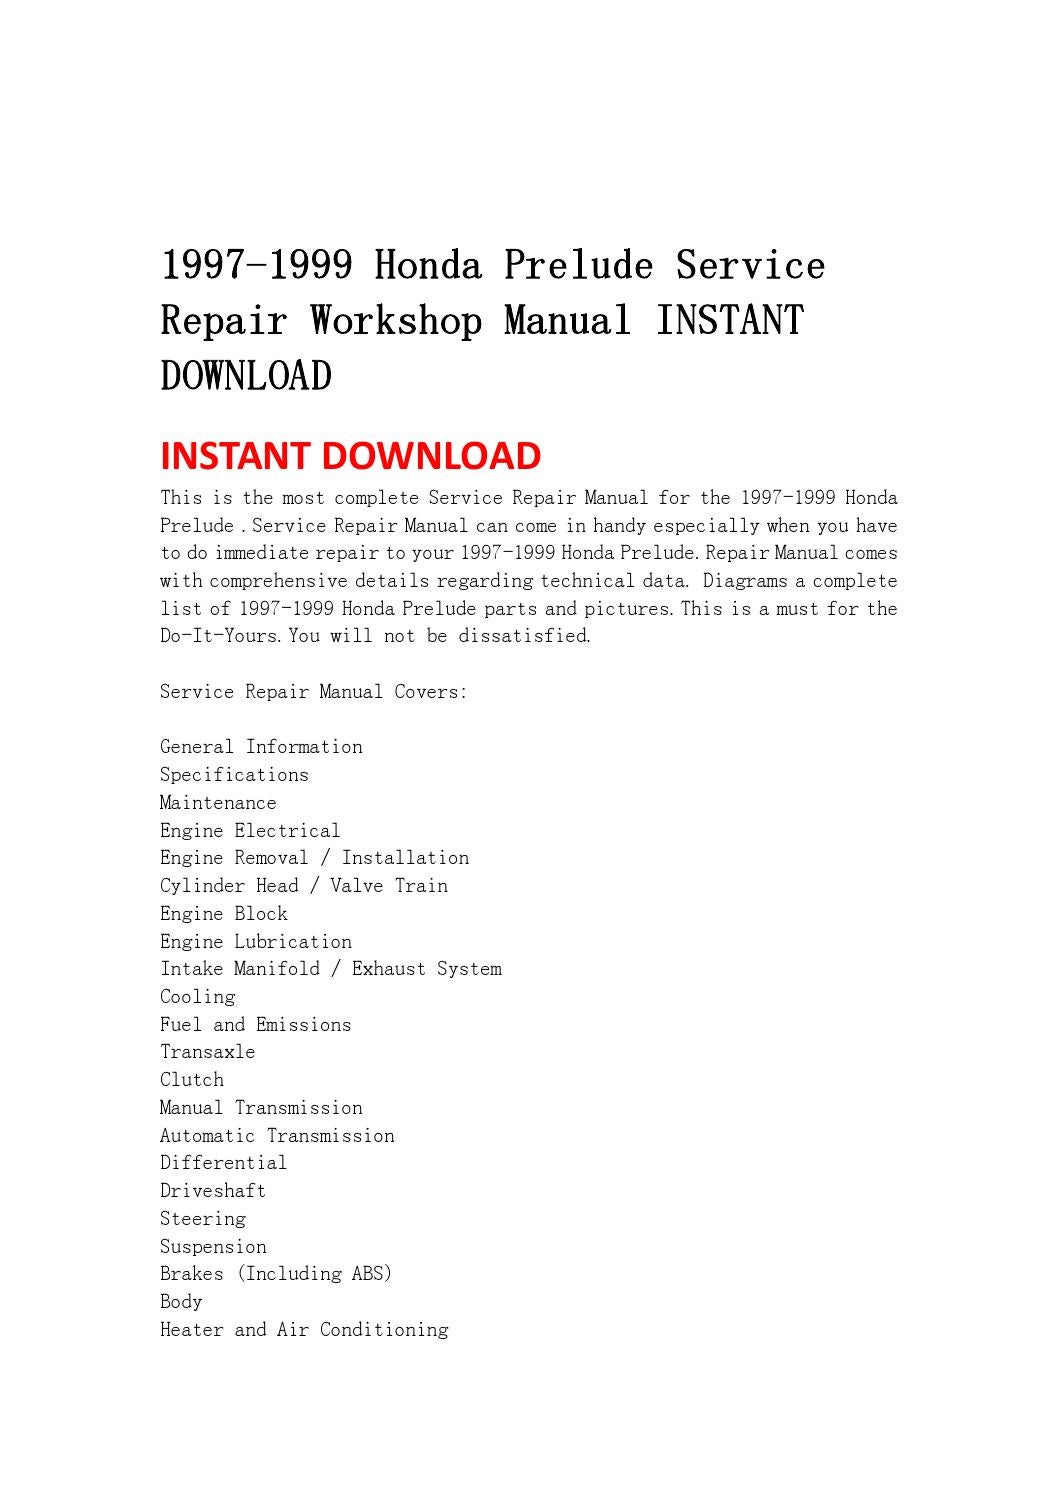 1995 honda prelude service manual